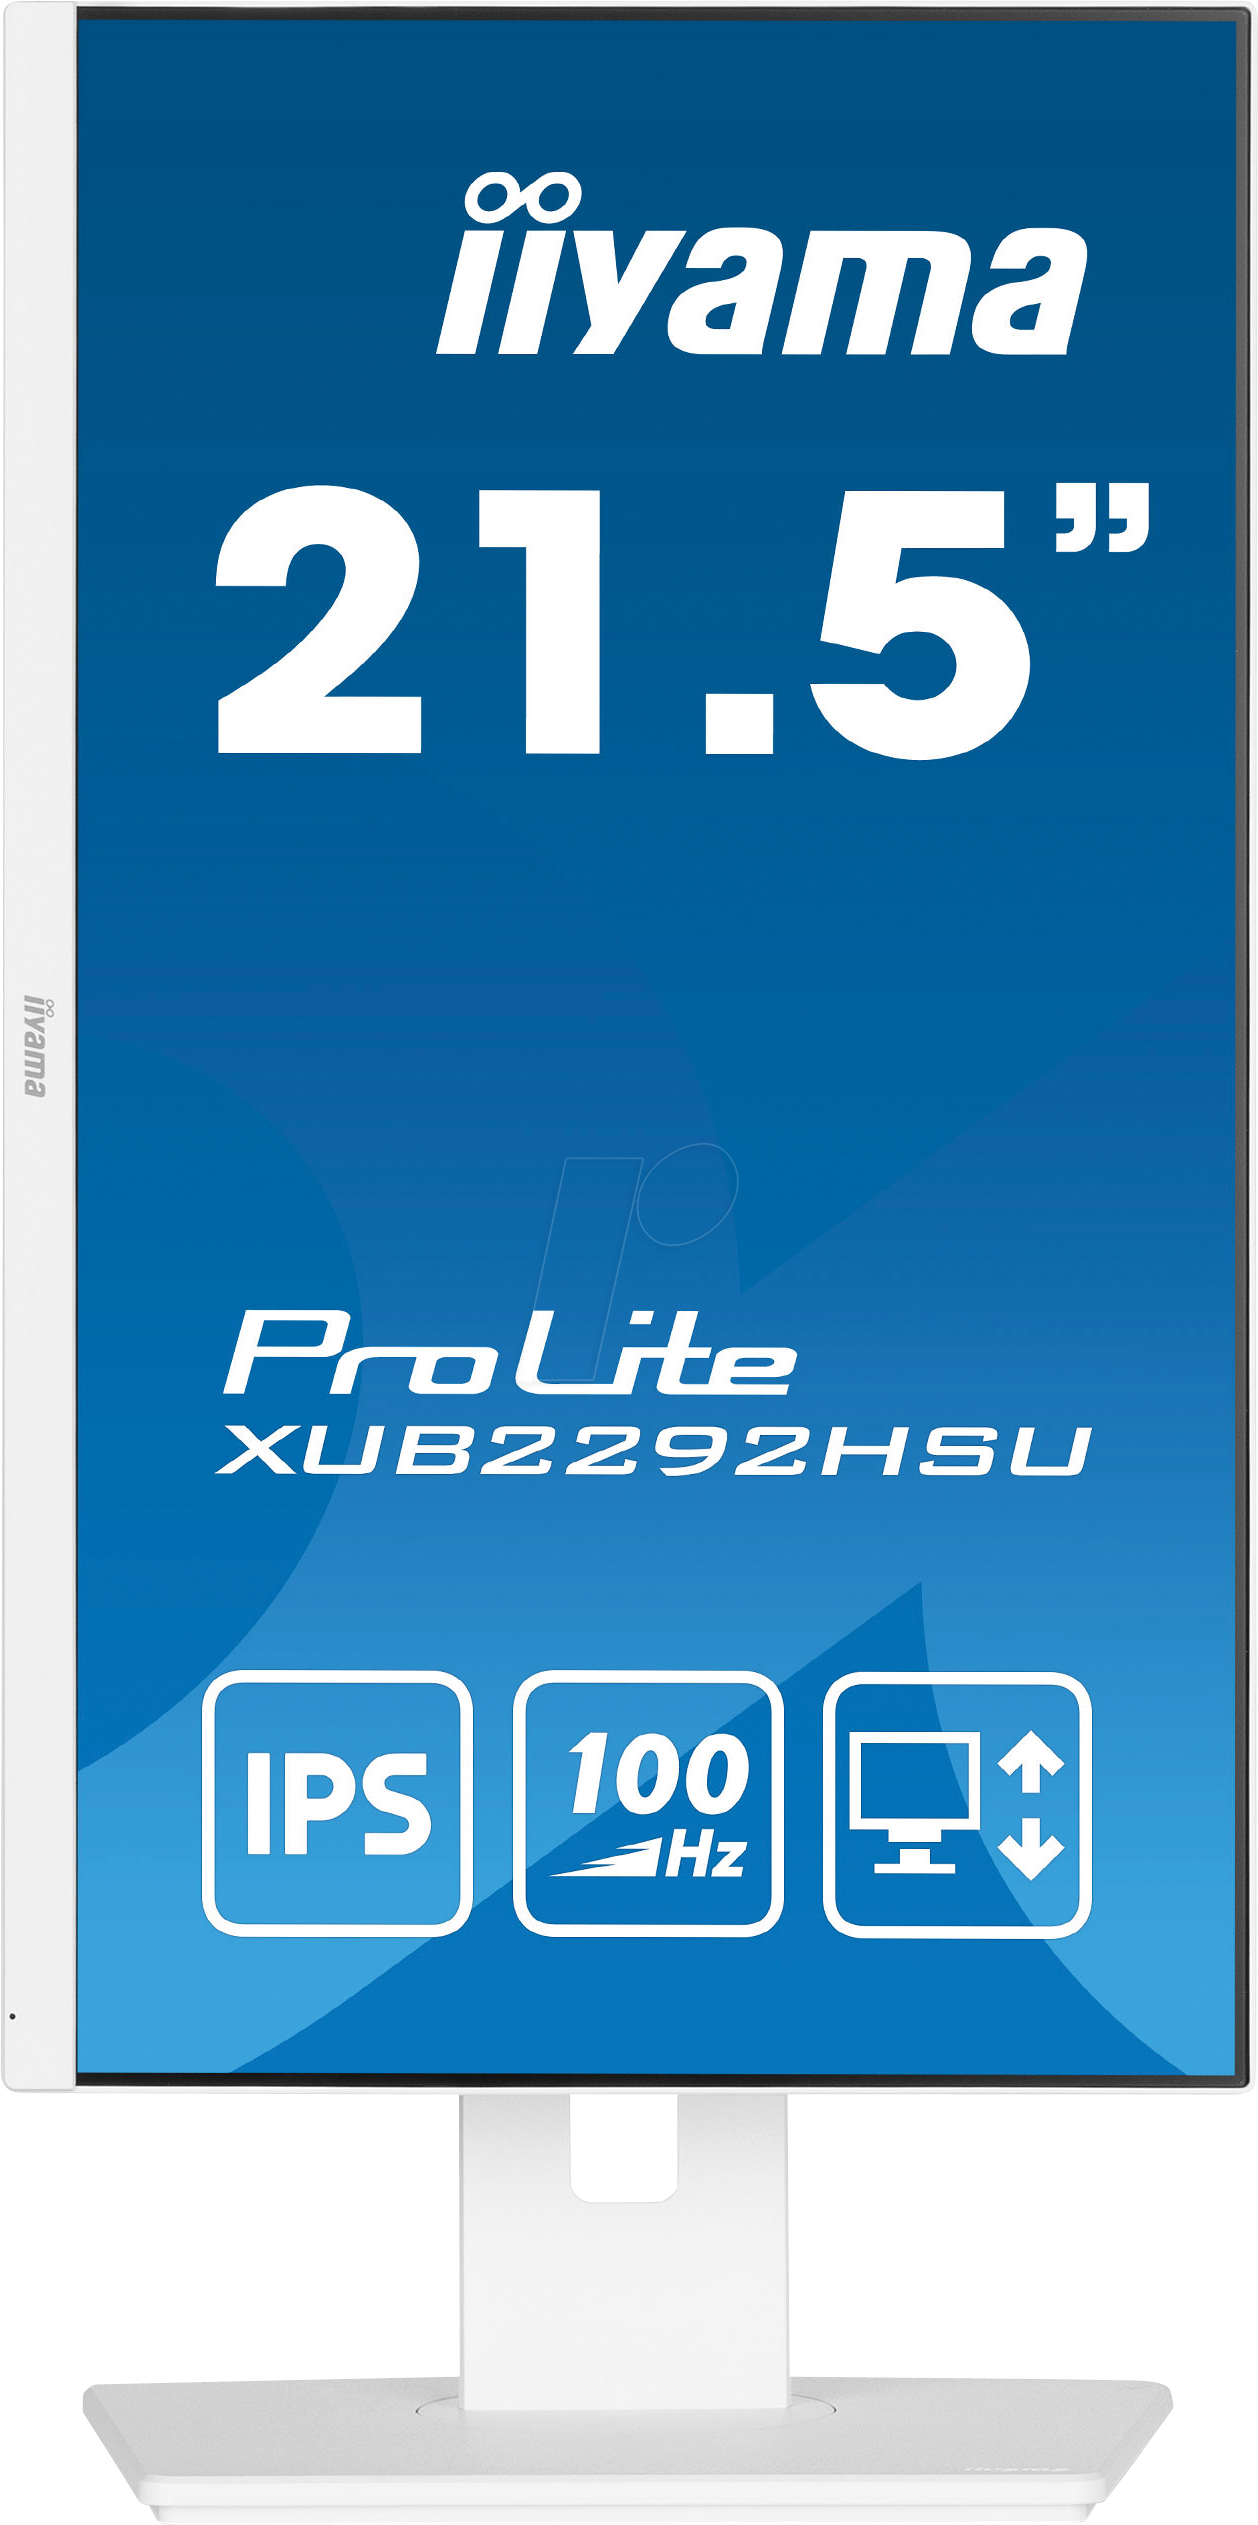 IIY XUB2292HSUW6 - 55cm Monitor, 1080p, USB, Pivot, weiß von Iiyama